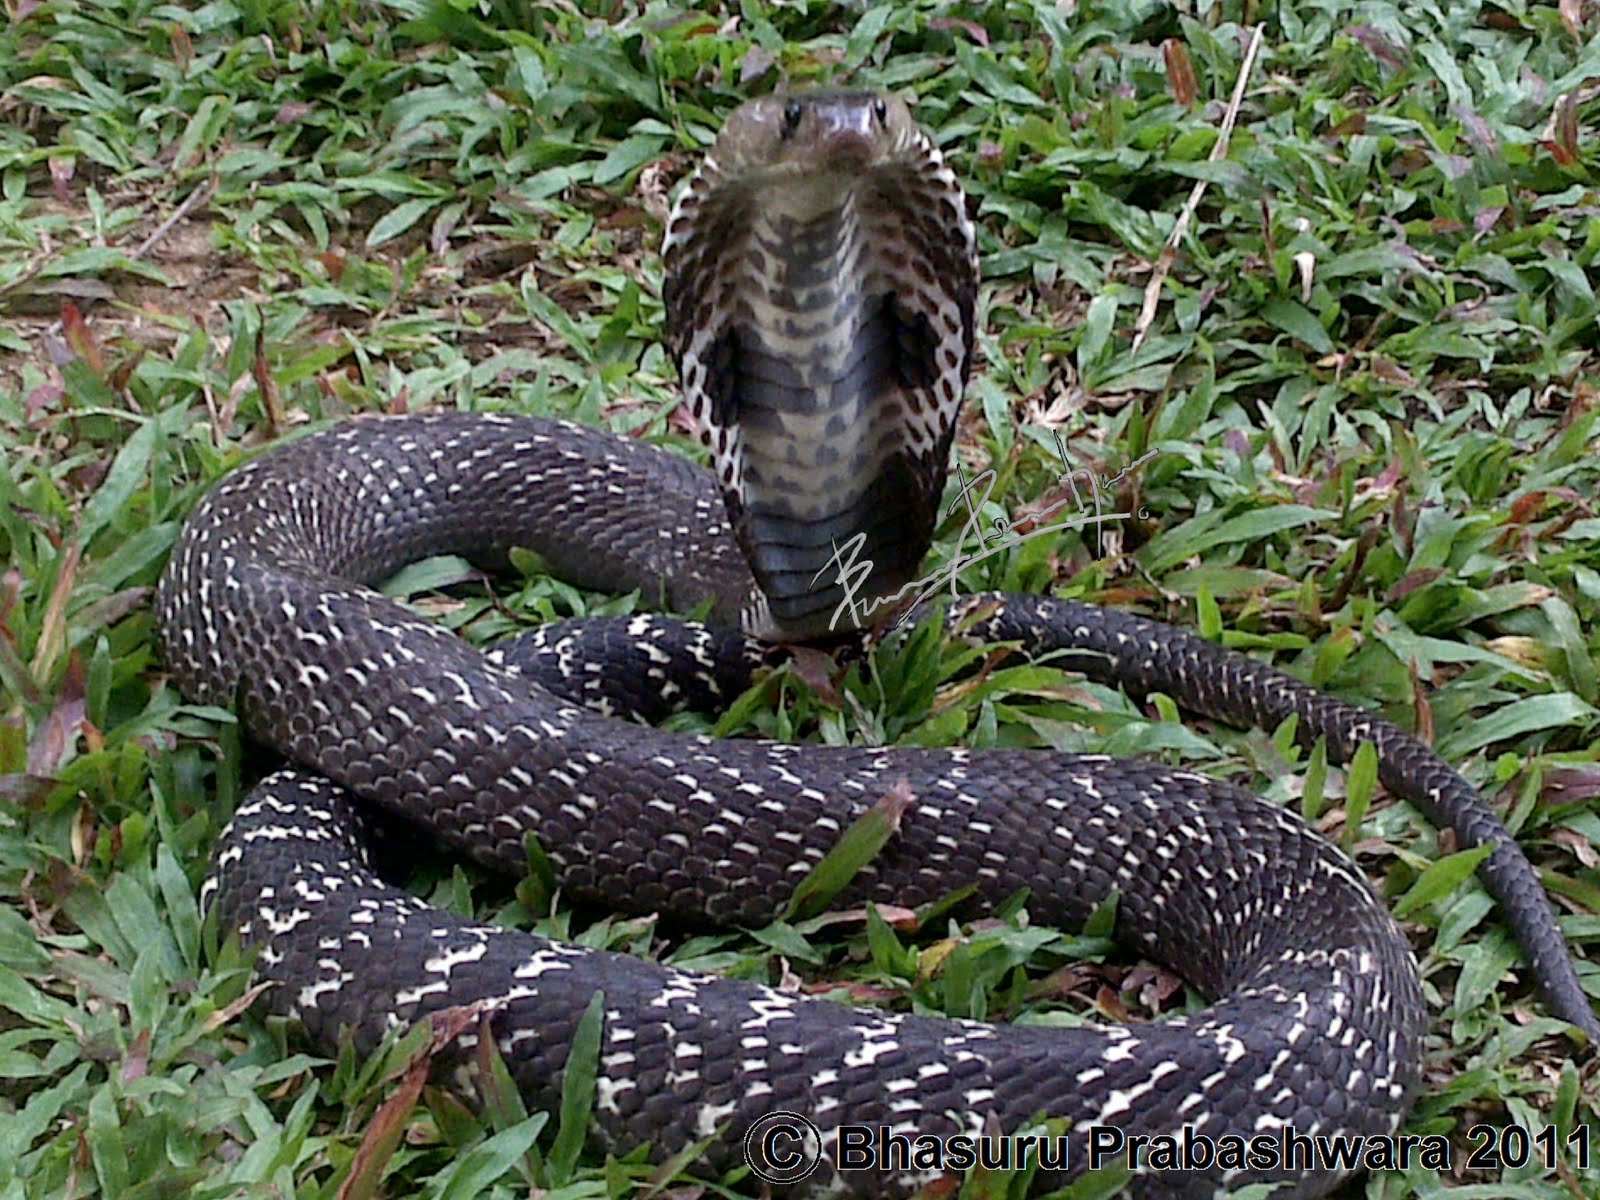  Snakes  of Sri  lanka  by Bhasuru Prabashwara